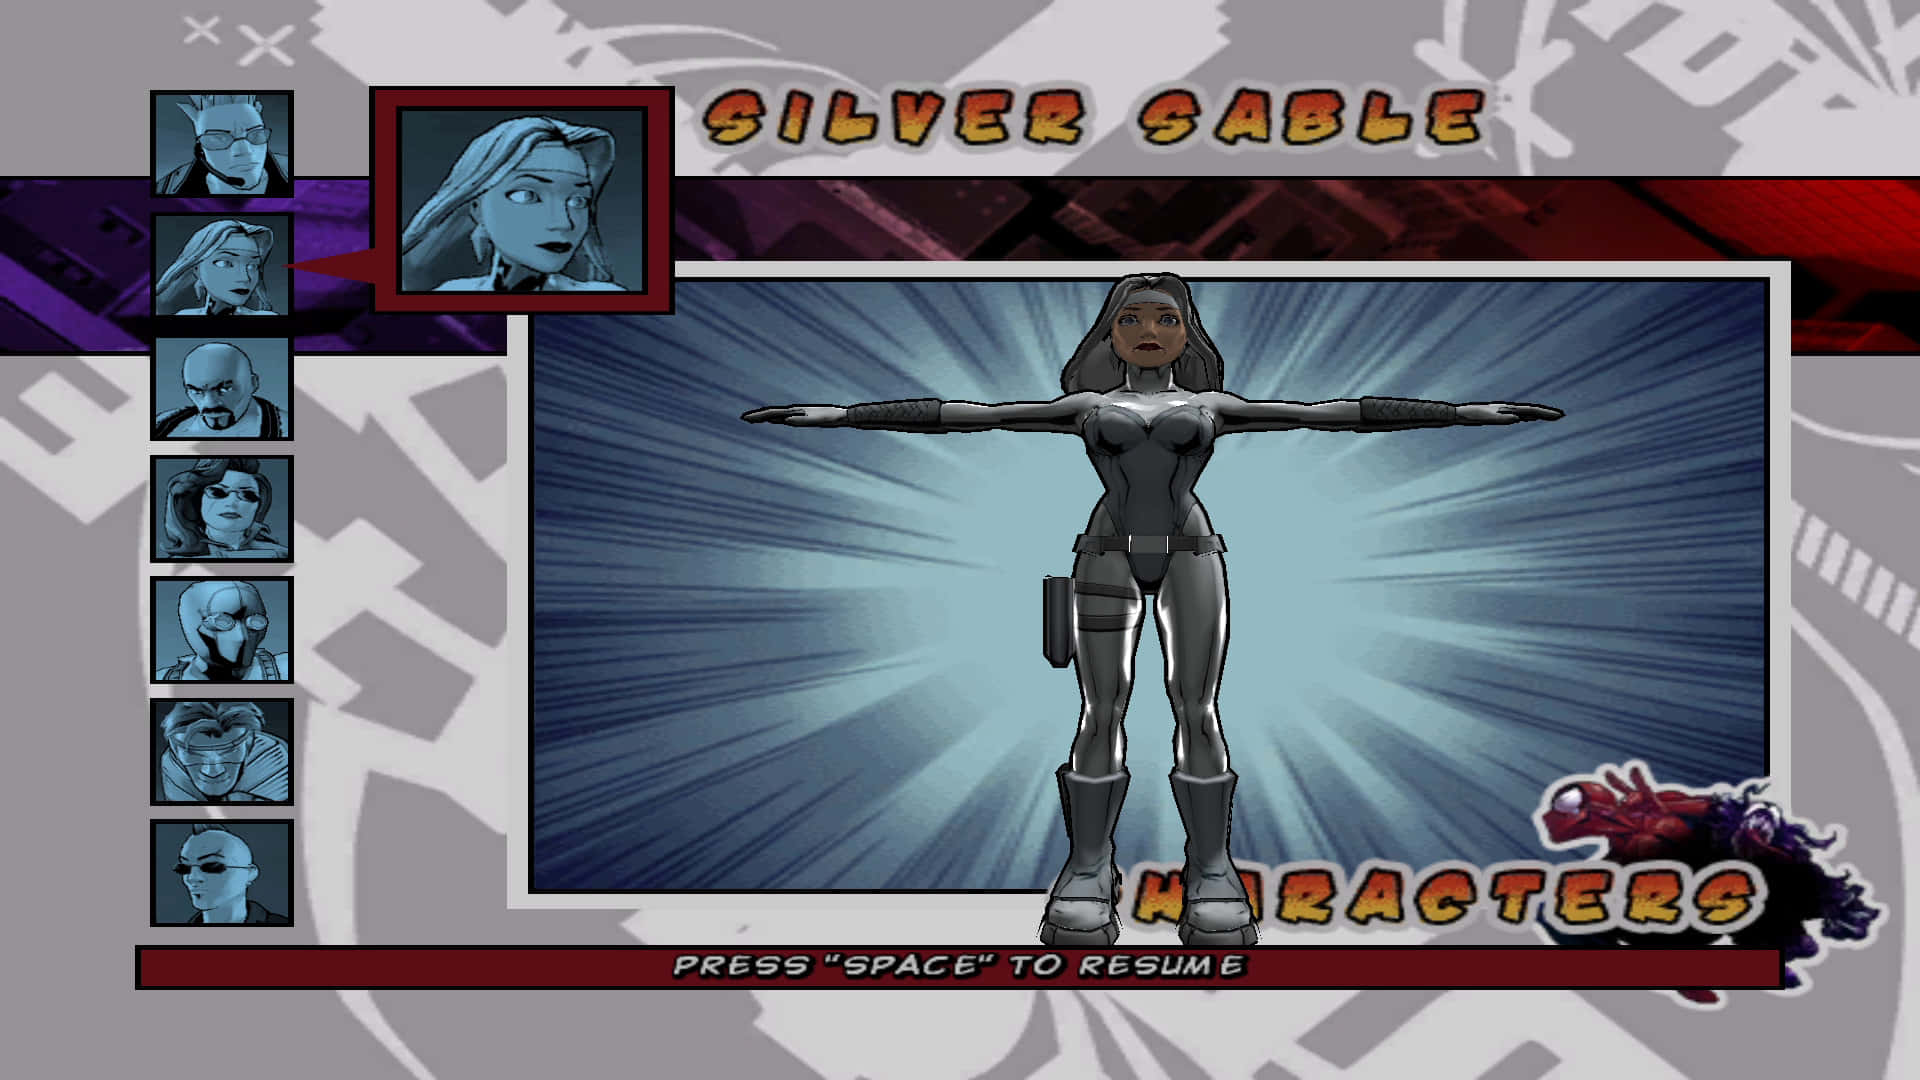 Silver Sable - The Strategic Savvy Superhero Wallpaper